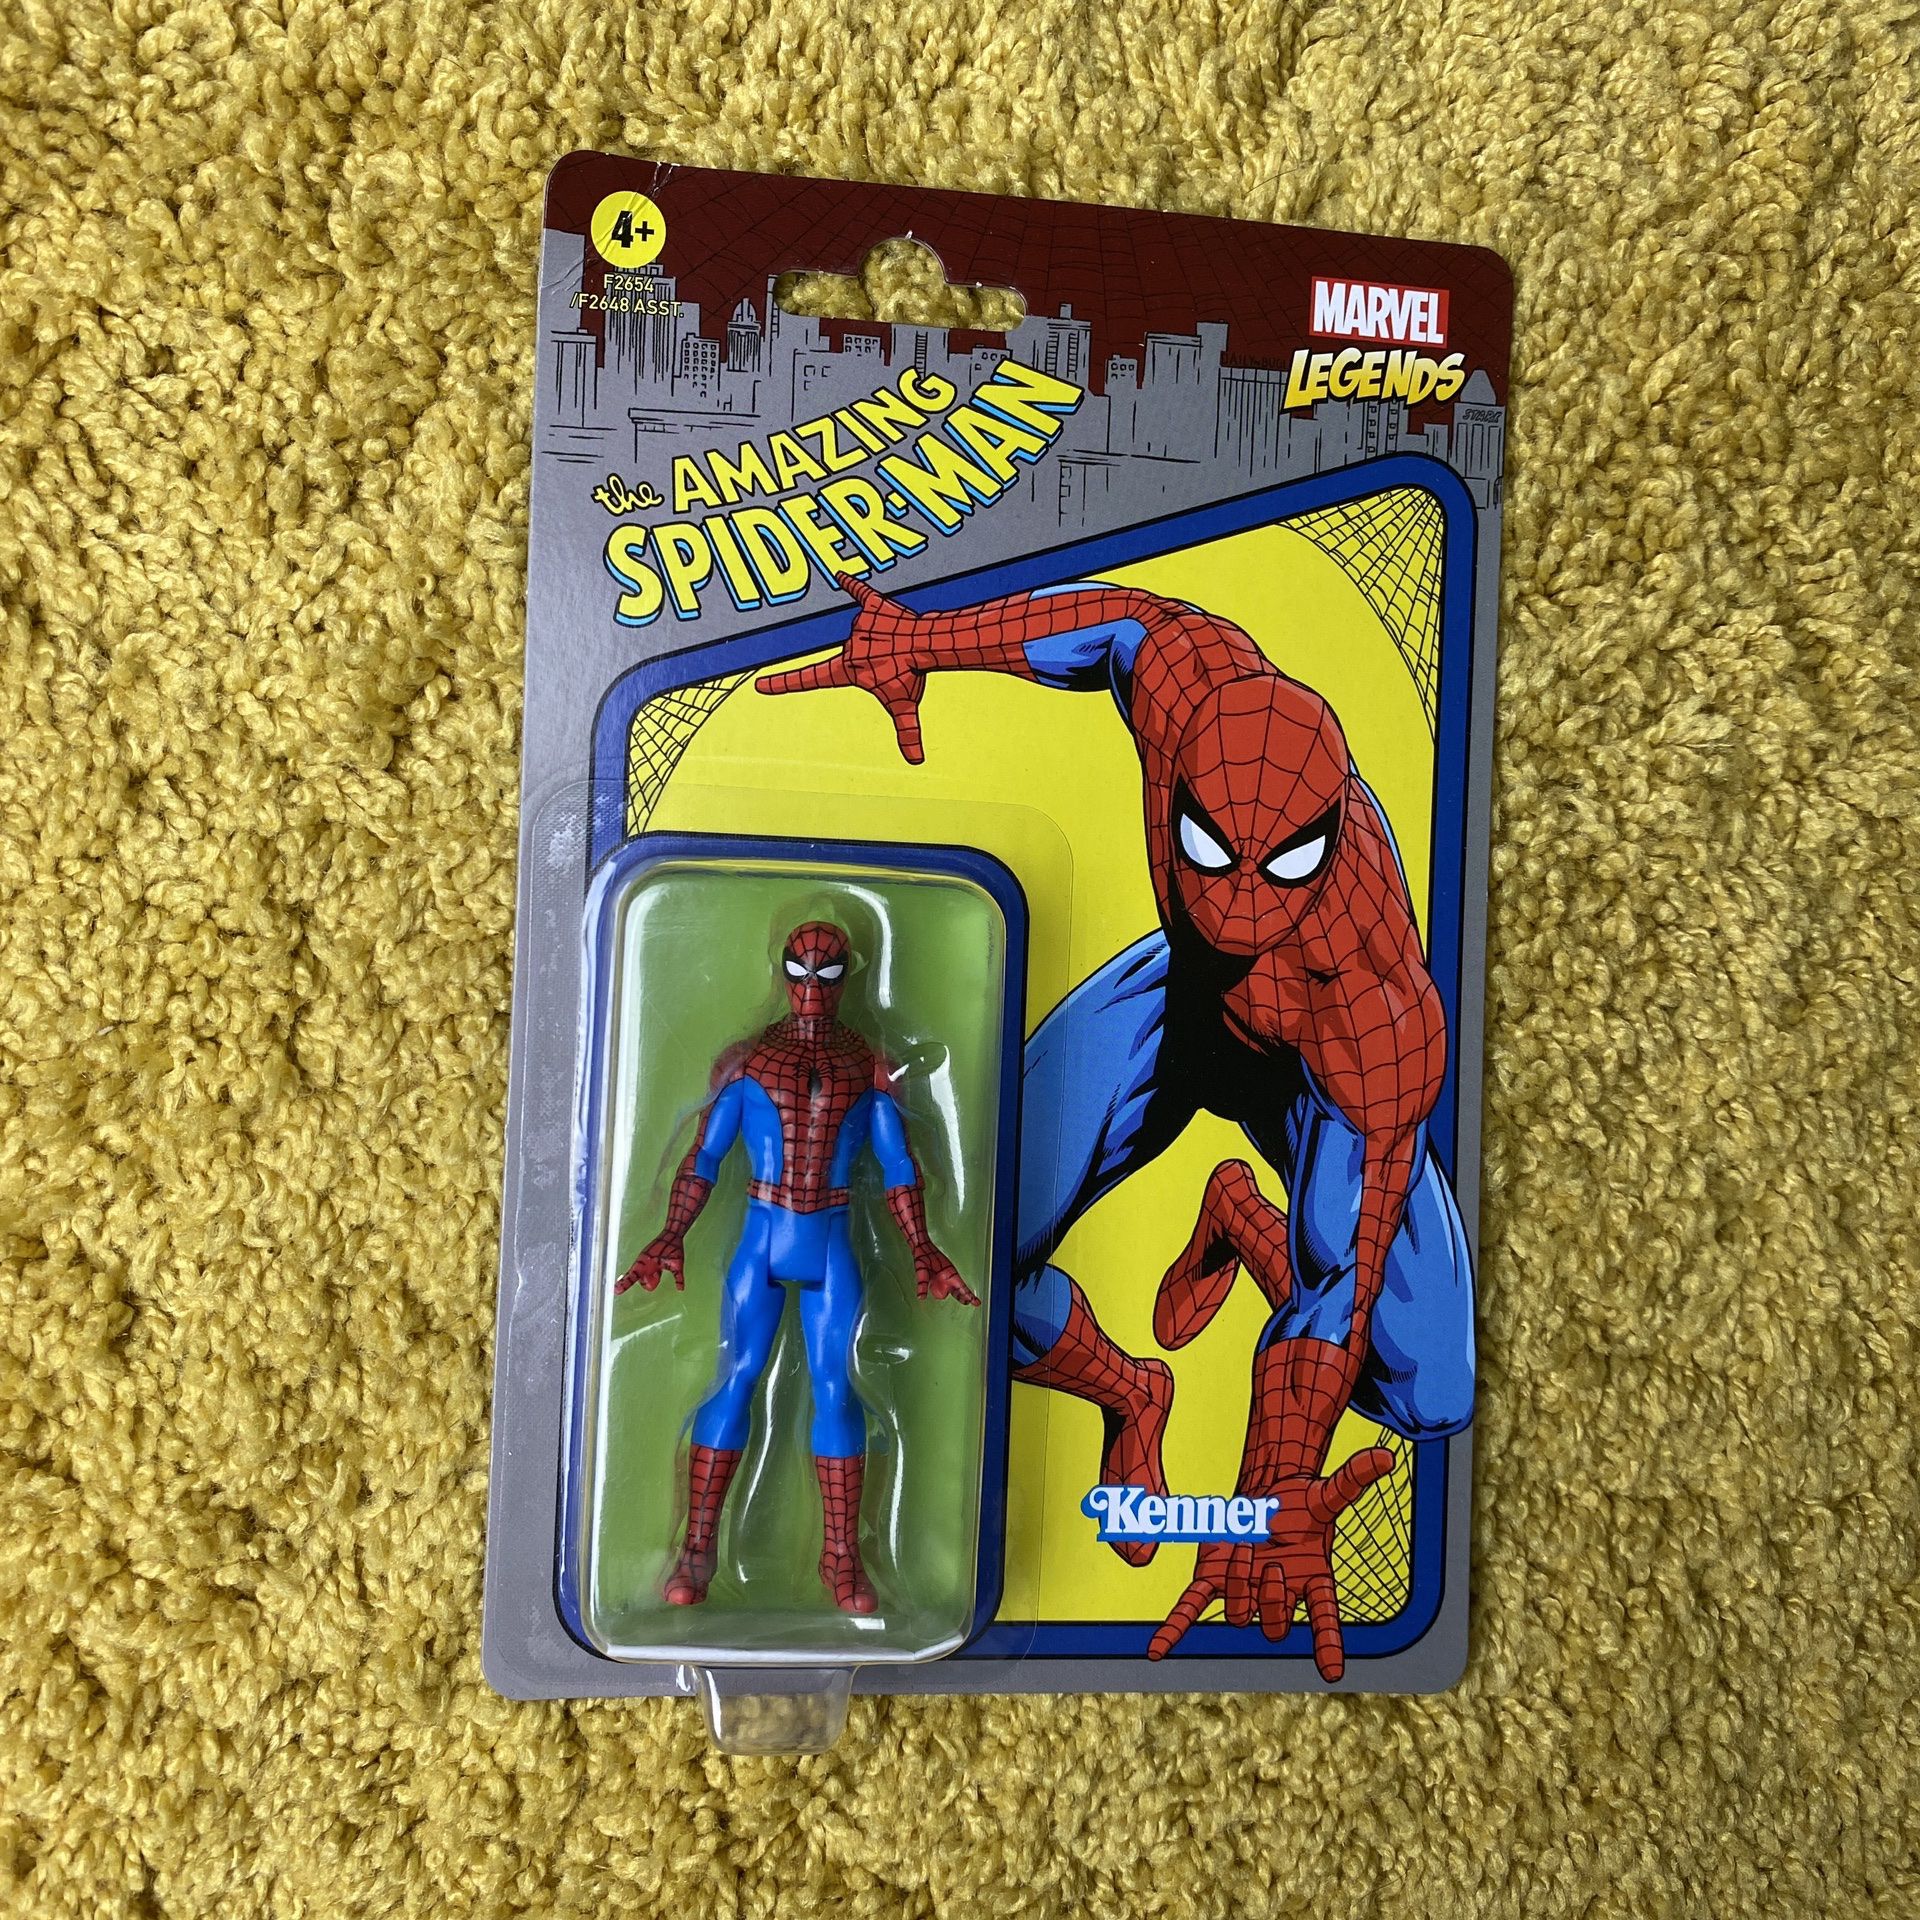 Marvel Legends Avengers Spider Man Vinyl Toy Retro Vintage Action Figure By Kenner Hasbro X-Men - BRAND NEW & SEALED